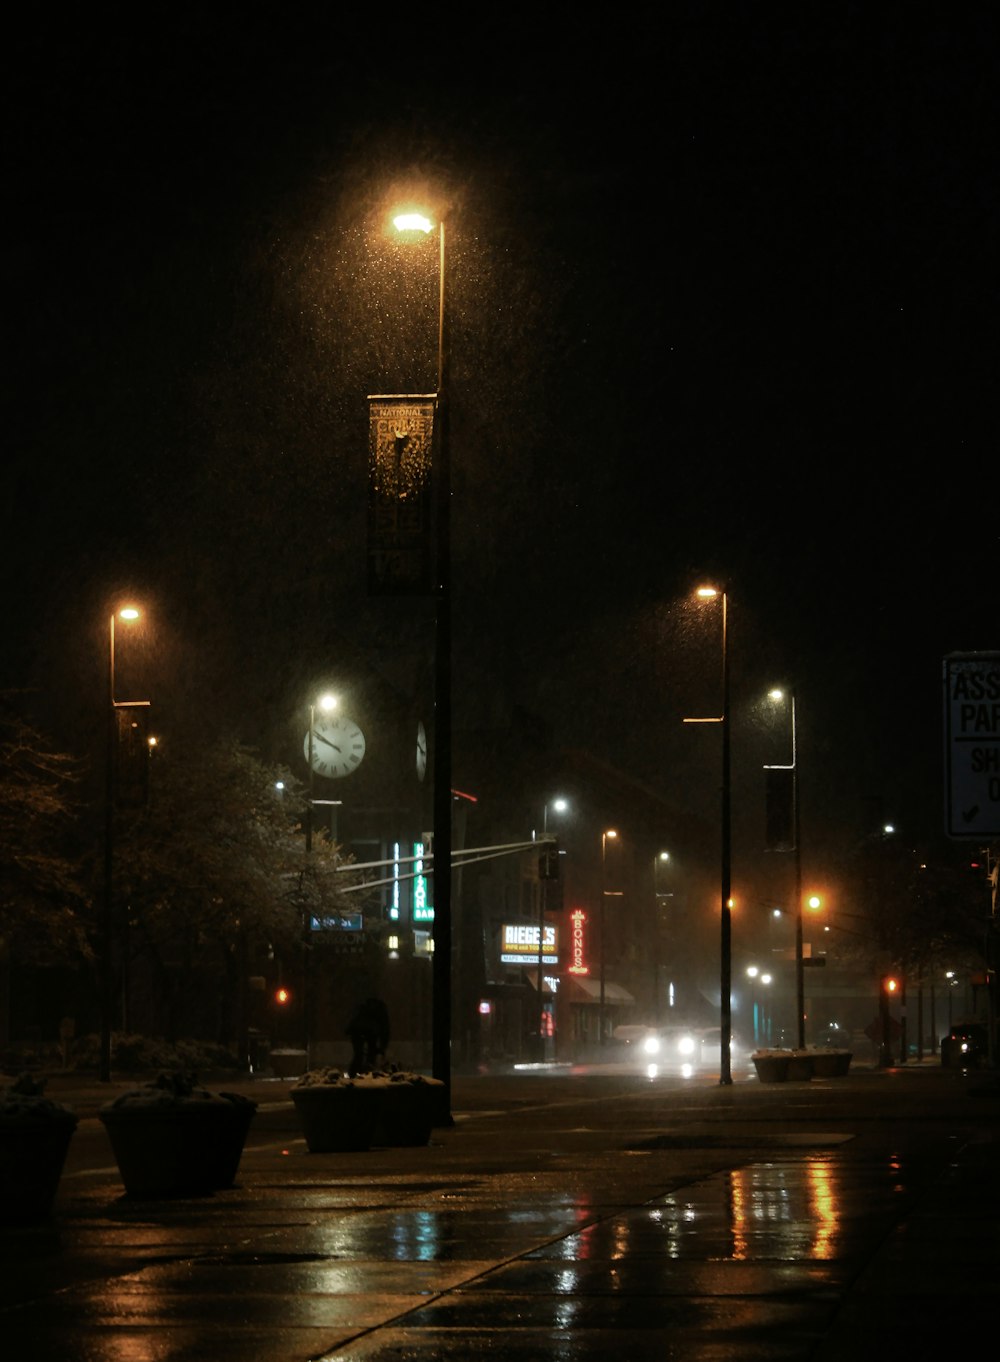 street light turned on during night time photo – Free Lamp post Image on  Unsplash